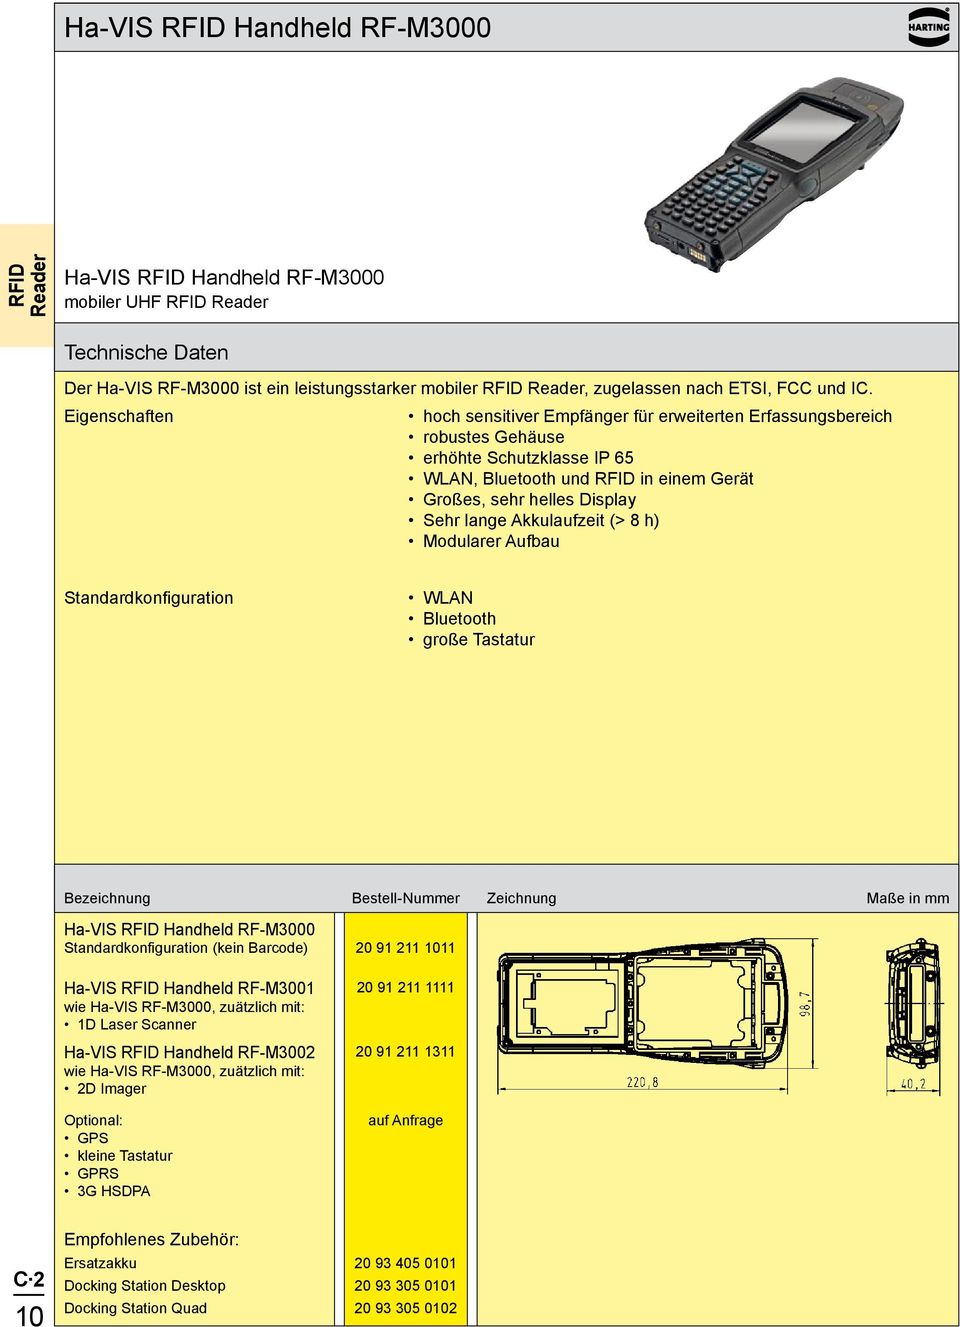 Akkulaufzeit (> 8 h) Modularer Aufbau Standardkonfiguration WLAN Bluetooth große Tastatur Ha-VIS Handheld RF-M3000 Standardkonfiguration (kein Barcode) 20 91 211 1011 Ha-VIS Handheld RF-M3001 wie